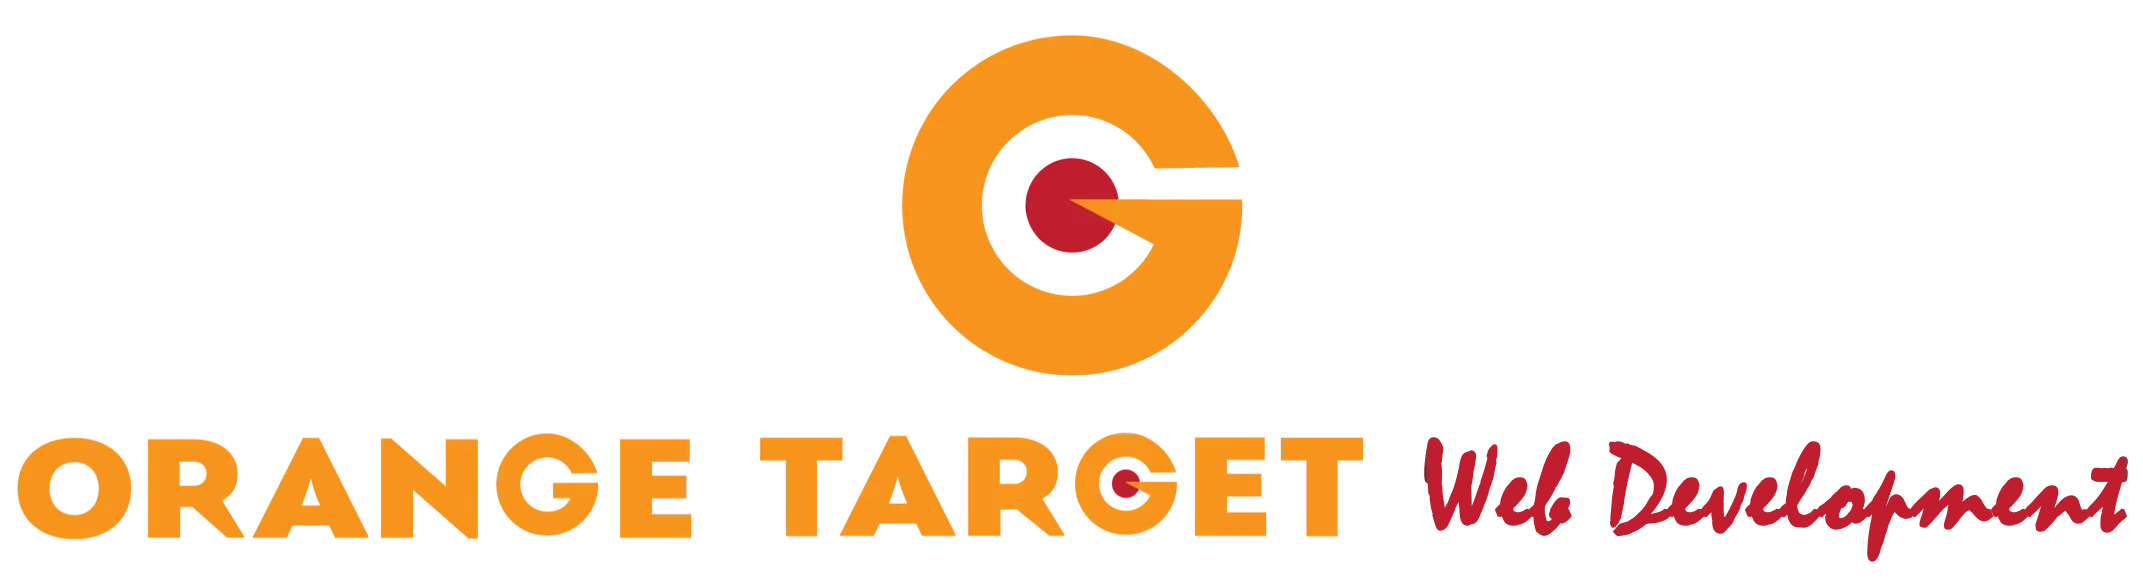 Orange Target Web Development